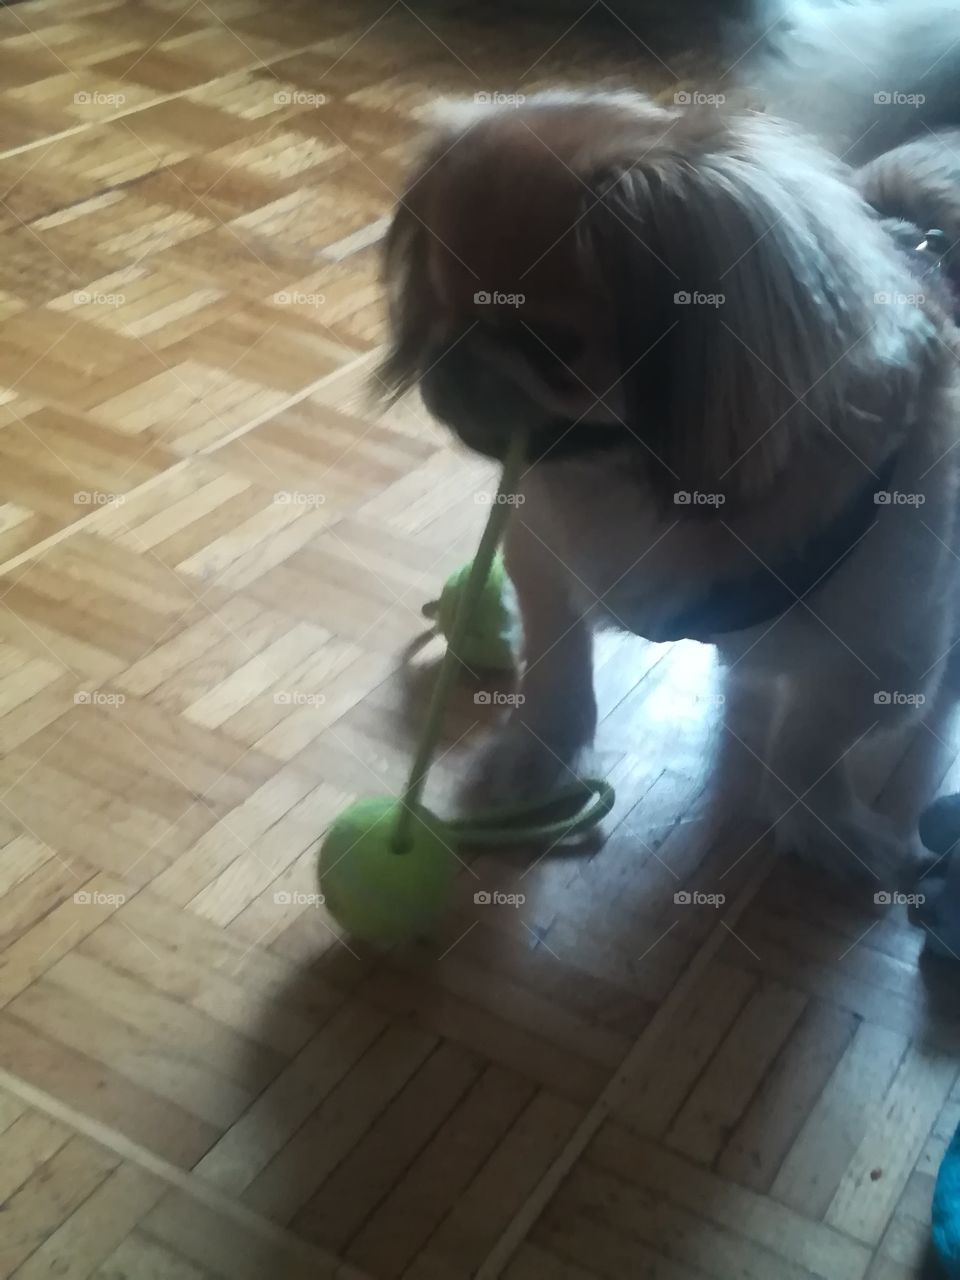 My dog an ball